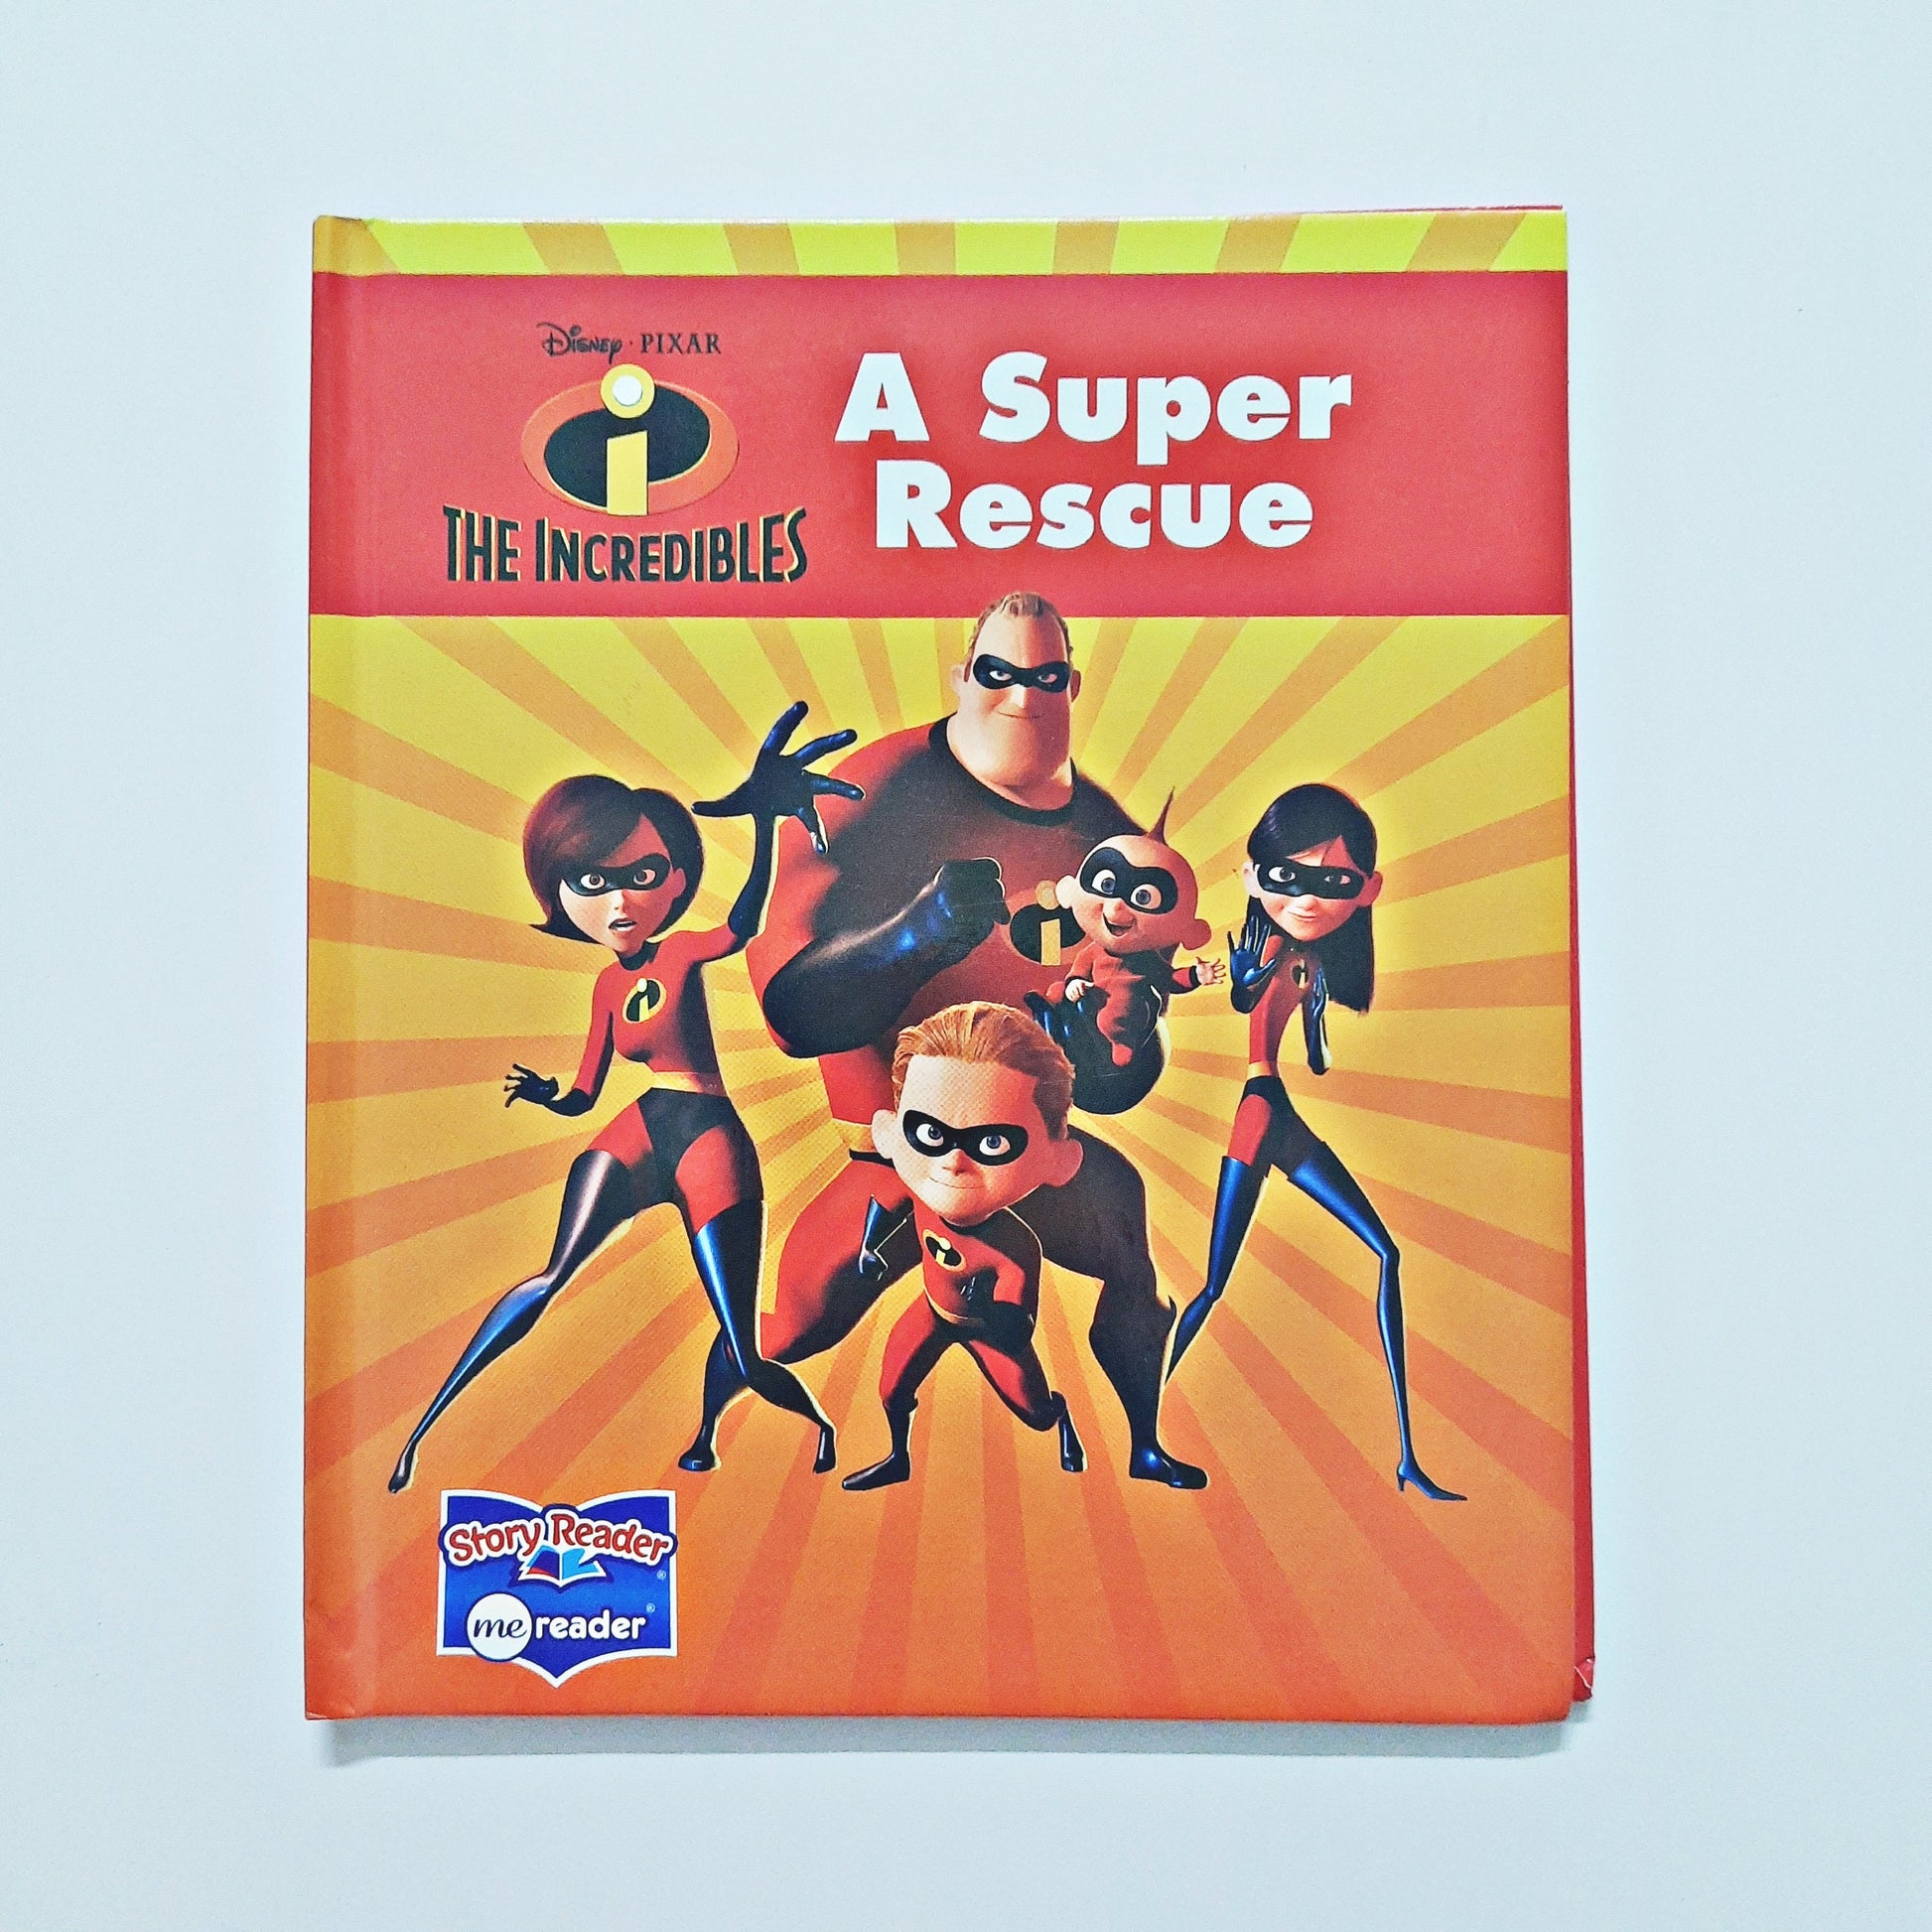 The Incredibles - A Super Rescue